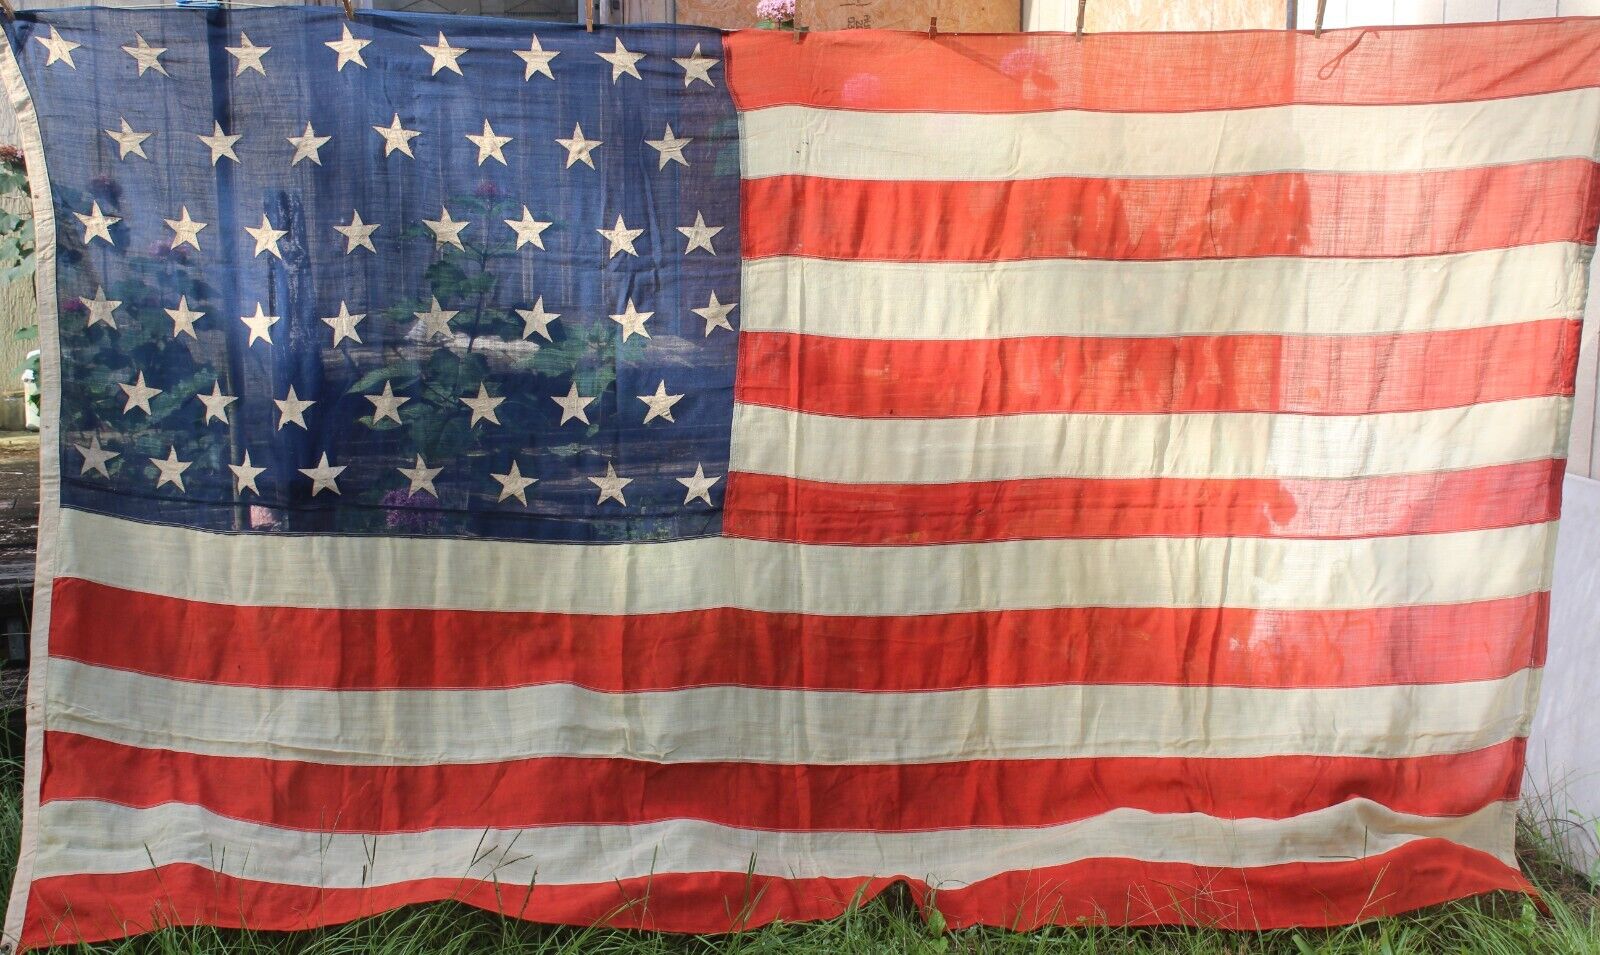 An Amazing 46 Star United States Flag 6 Feet by 10 Feet 1908-1912